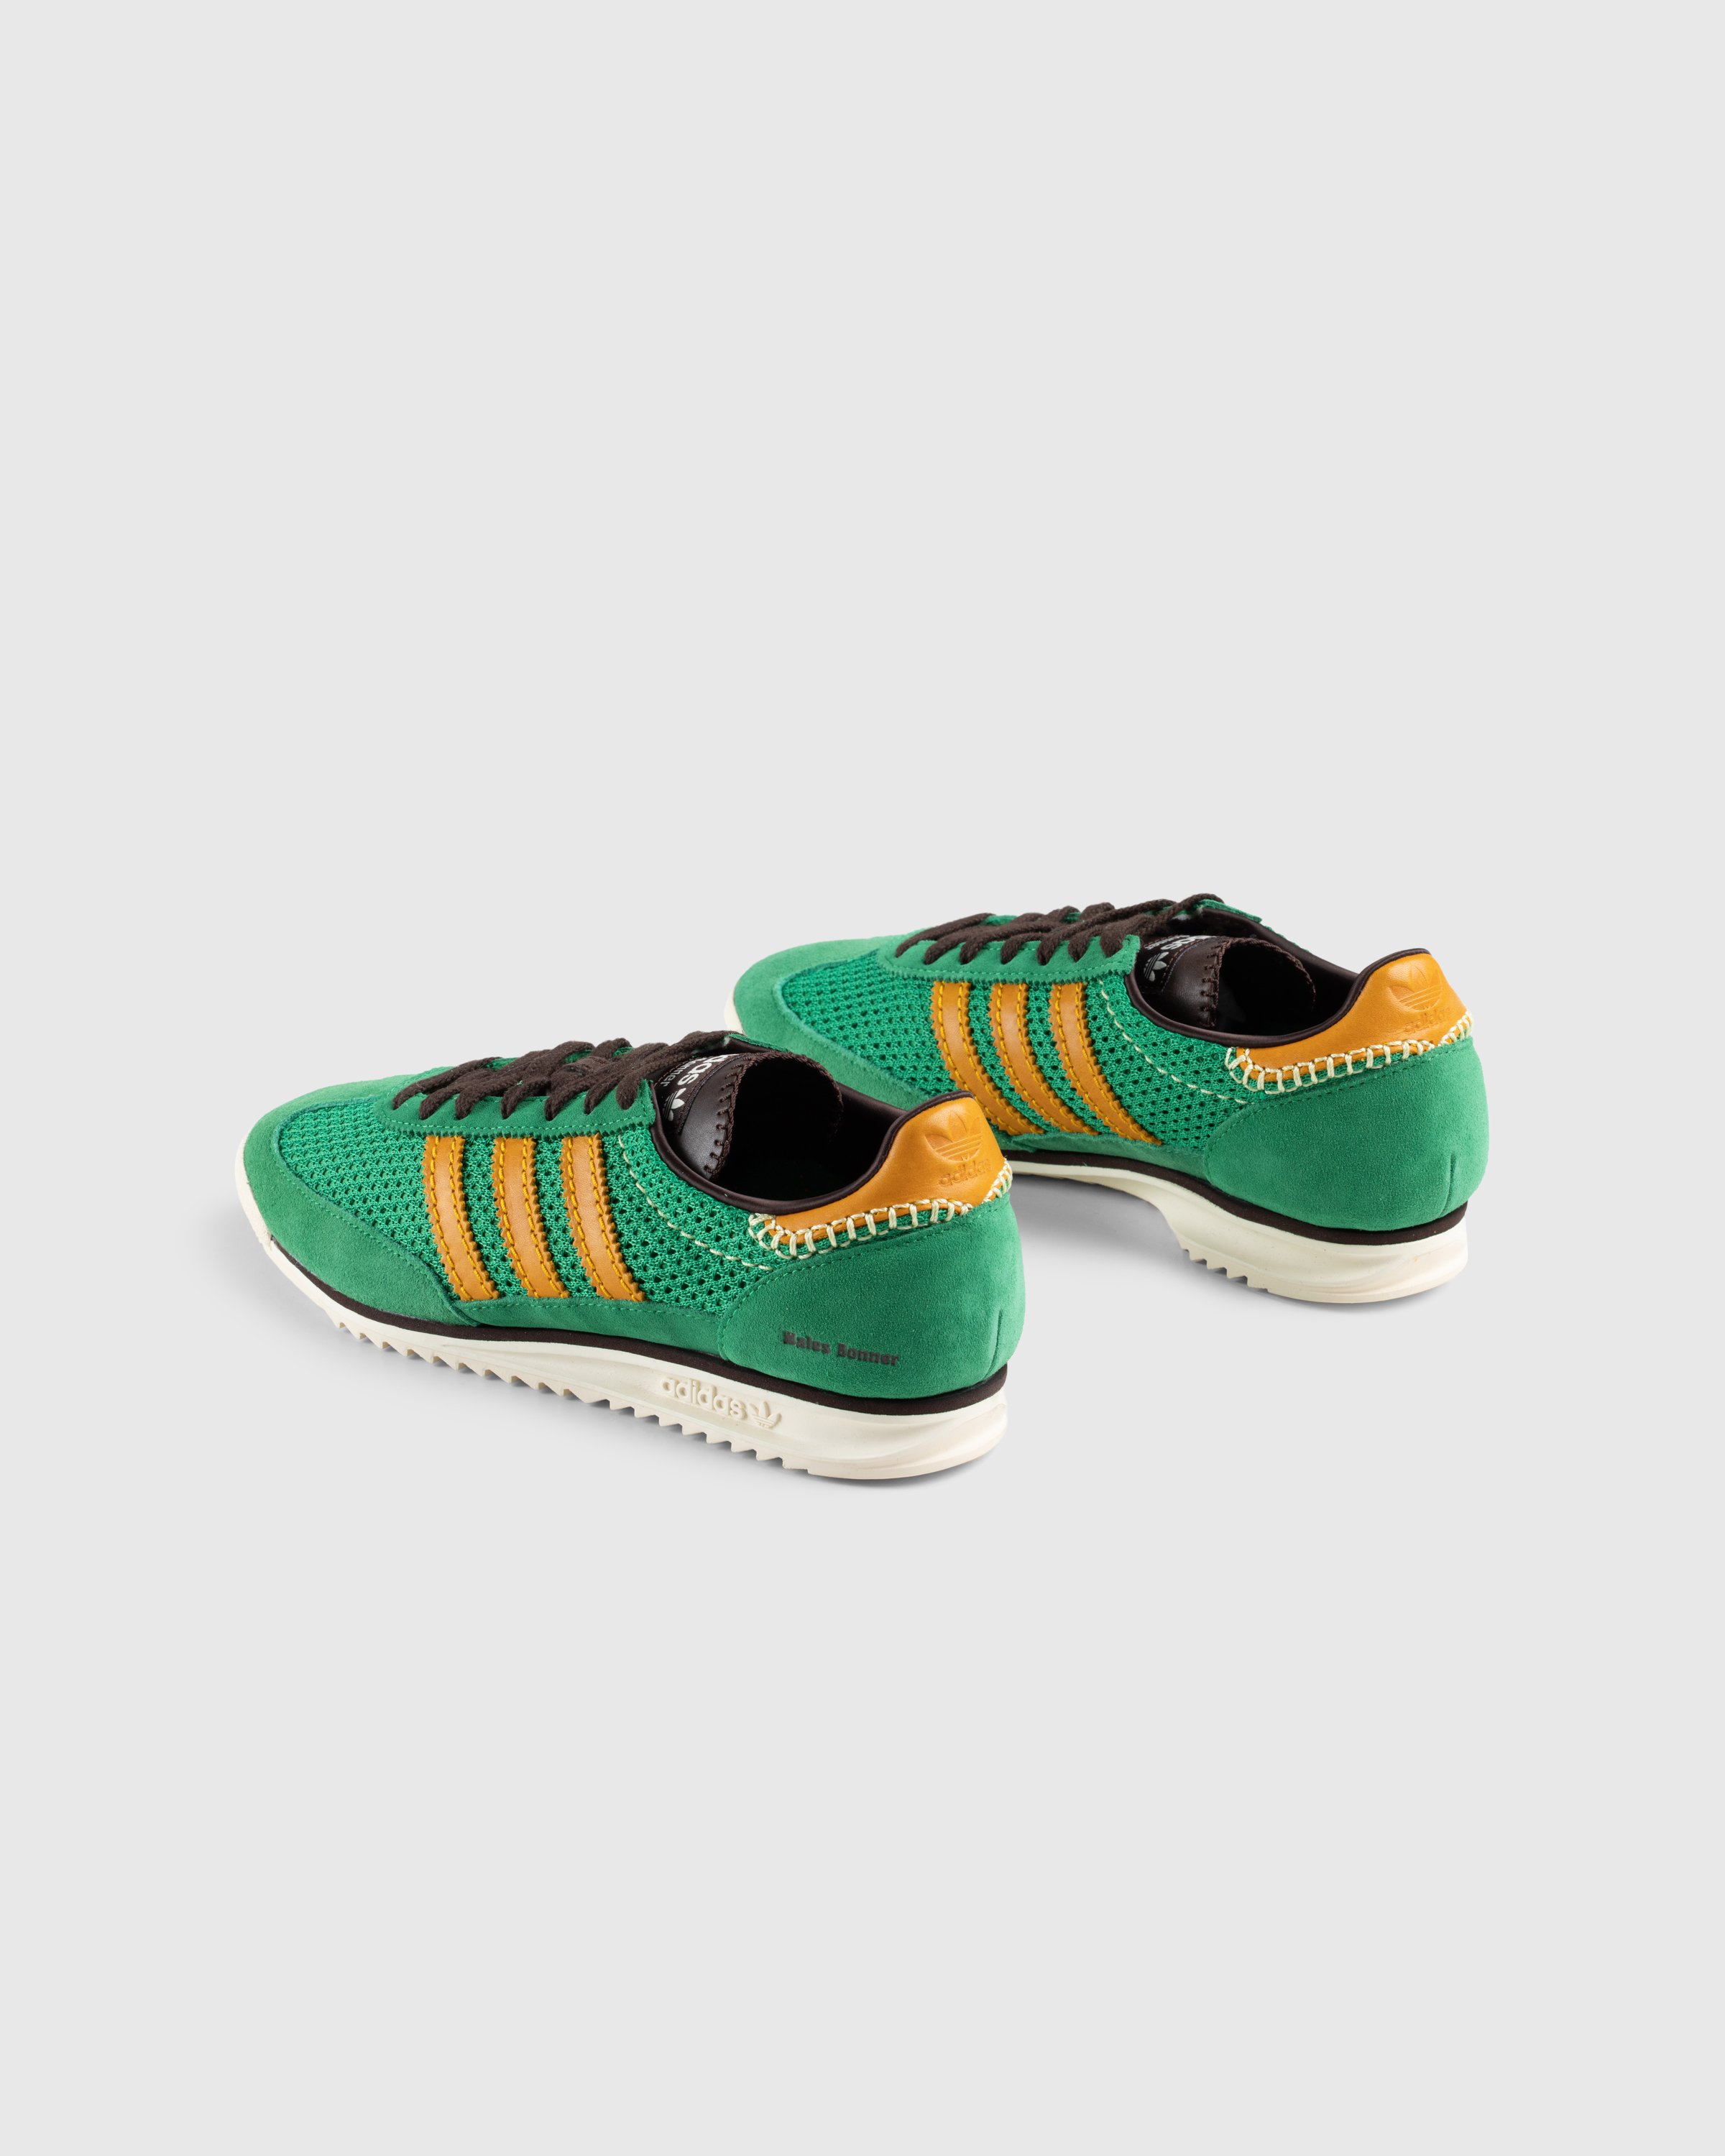 Adidas x Wales Bonner - SL72 Knit Team Green - Footwear - Green - Image 4